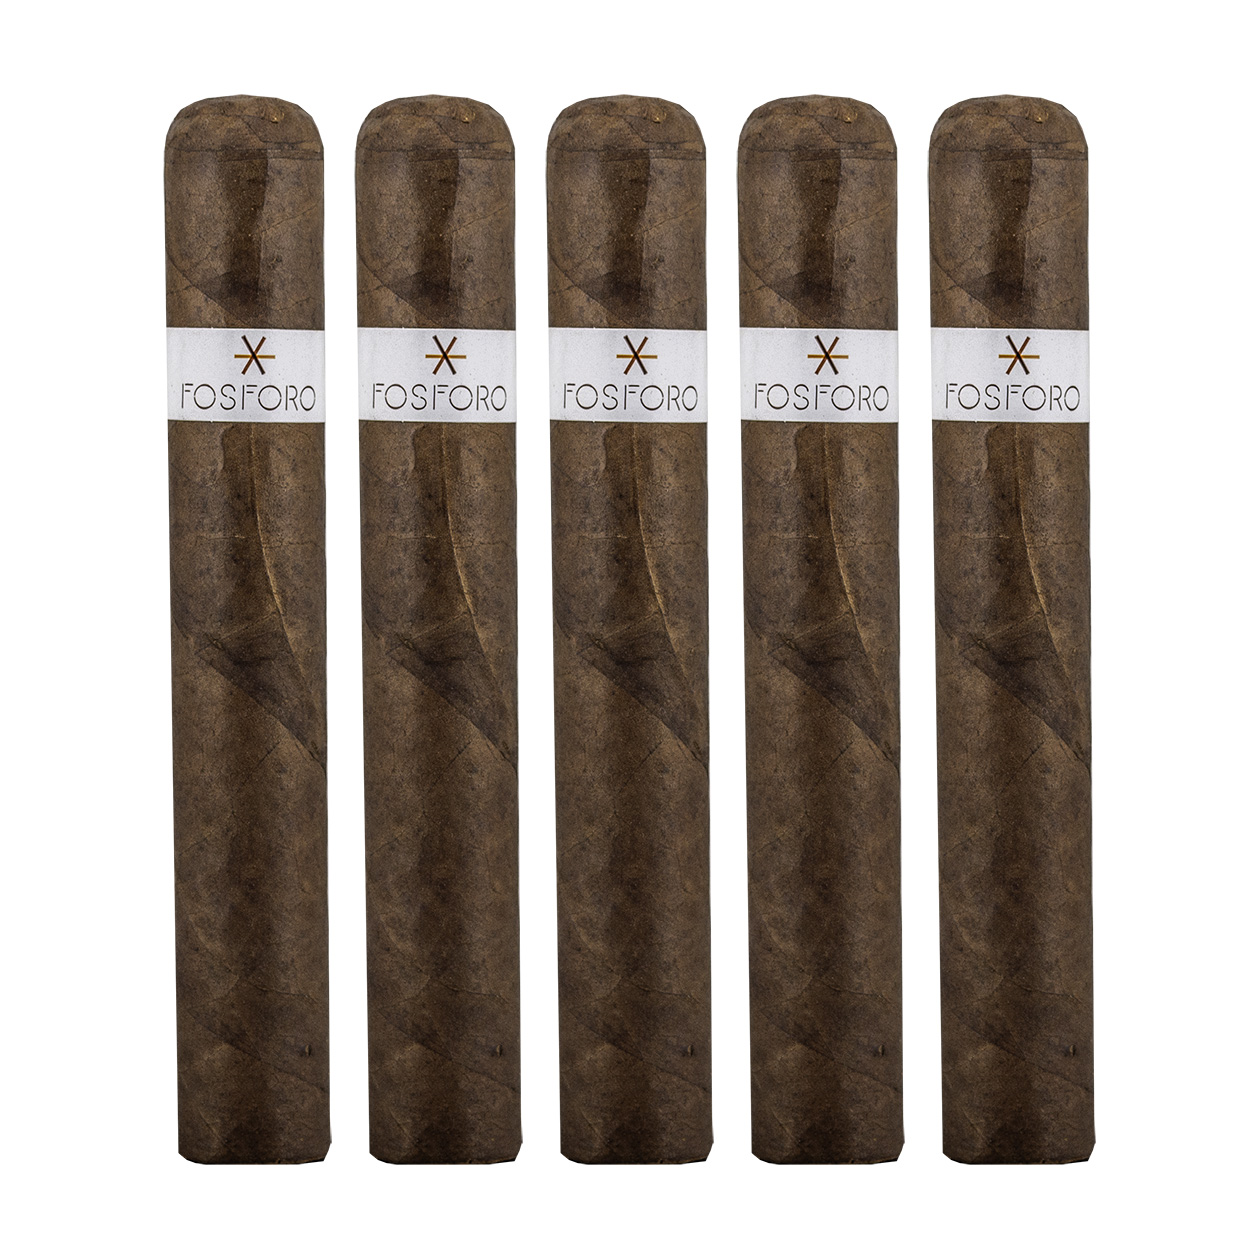 Fosforo Gordo Cigar - 5 Pack